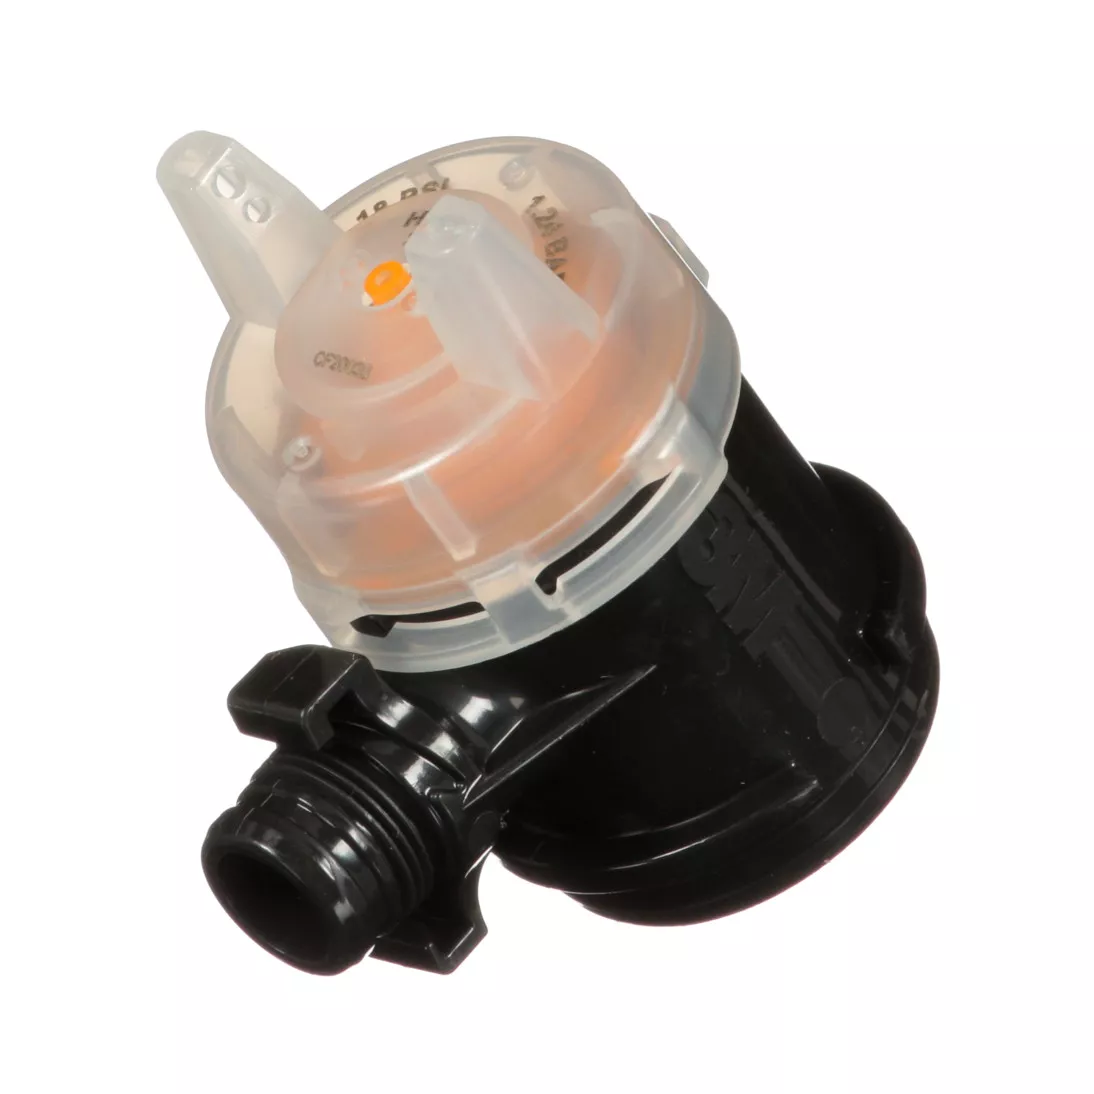 3M™ Performance Pressure HVLP Atomizing Head Refill Kit 26814, Orange,
1.4, 10 pack, 5 Packs/Case